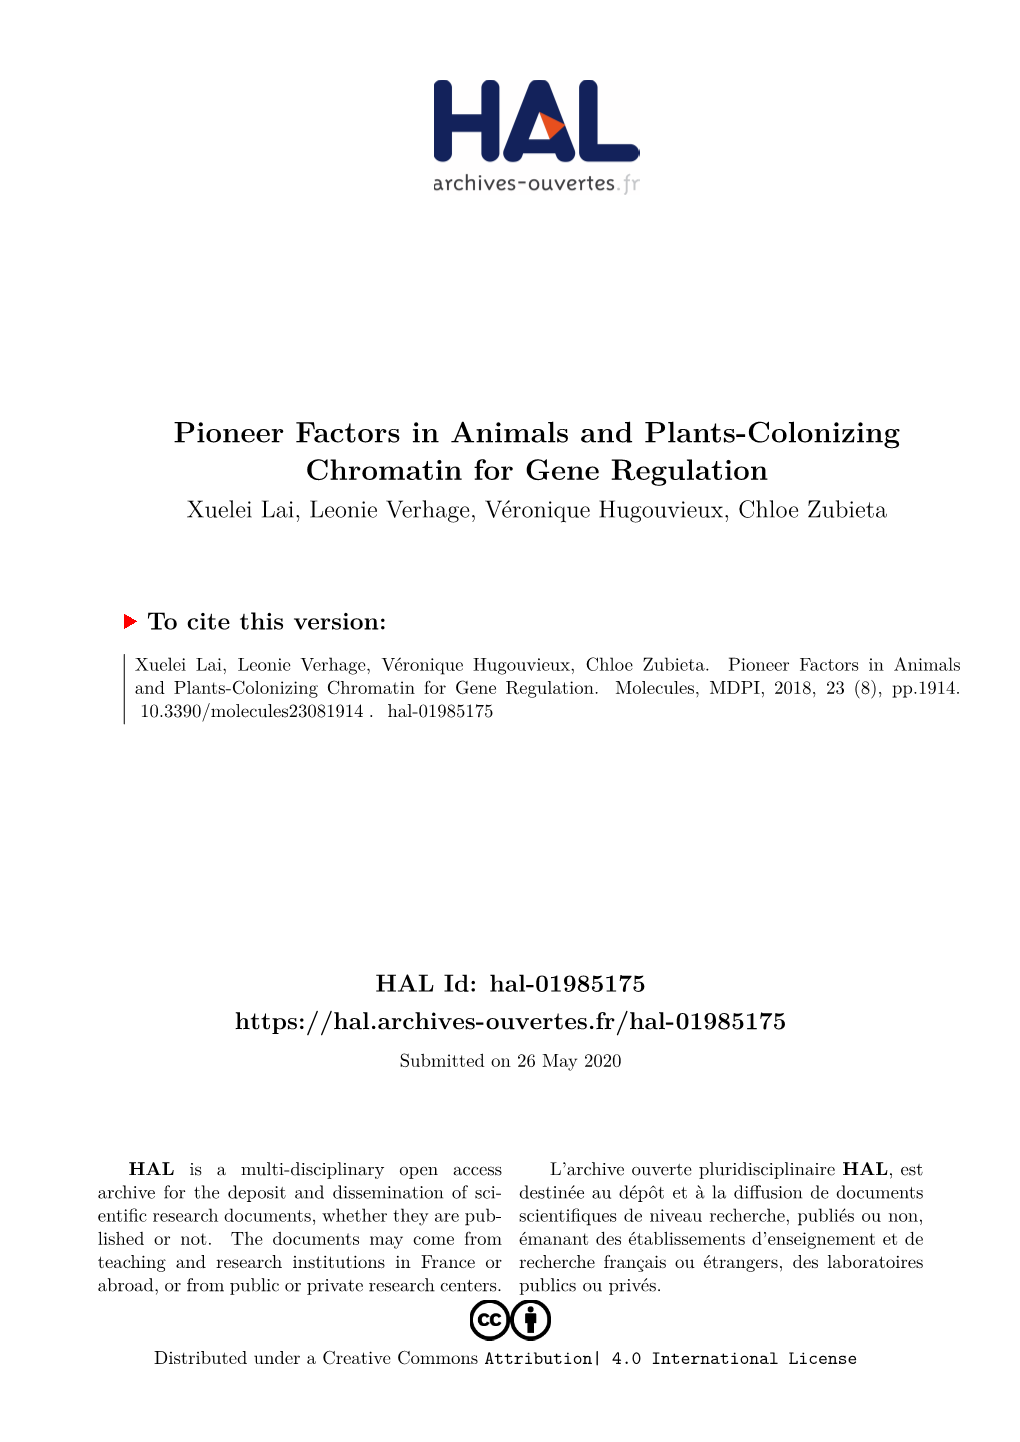 Pioneer Factors in Animals and Plants-Colonizing Chromatin for Gene Regulation Xuelei Lai, Leonie Verhage, Véronique Hugouvieux, Chloe Zubieta